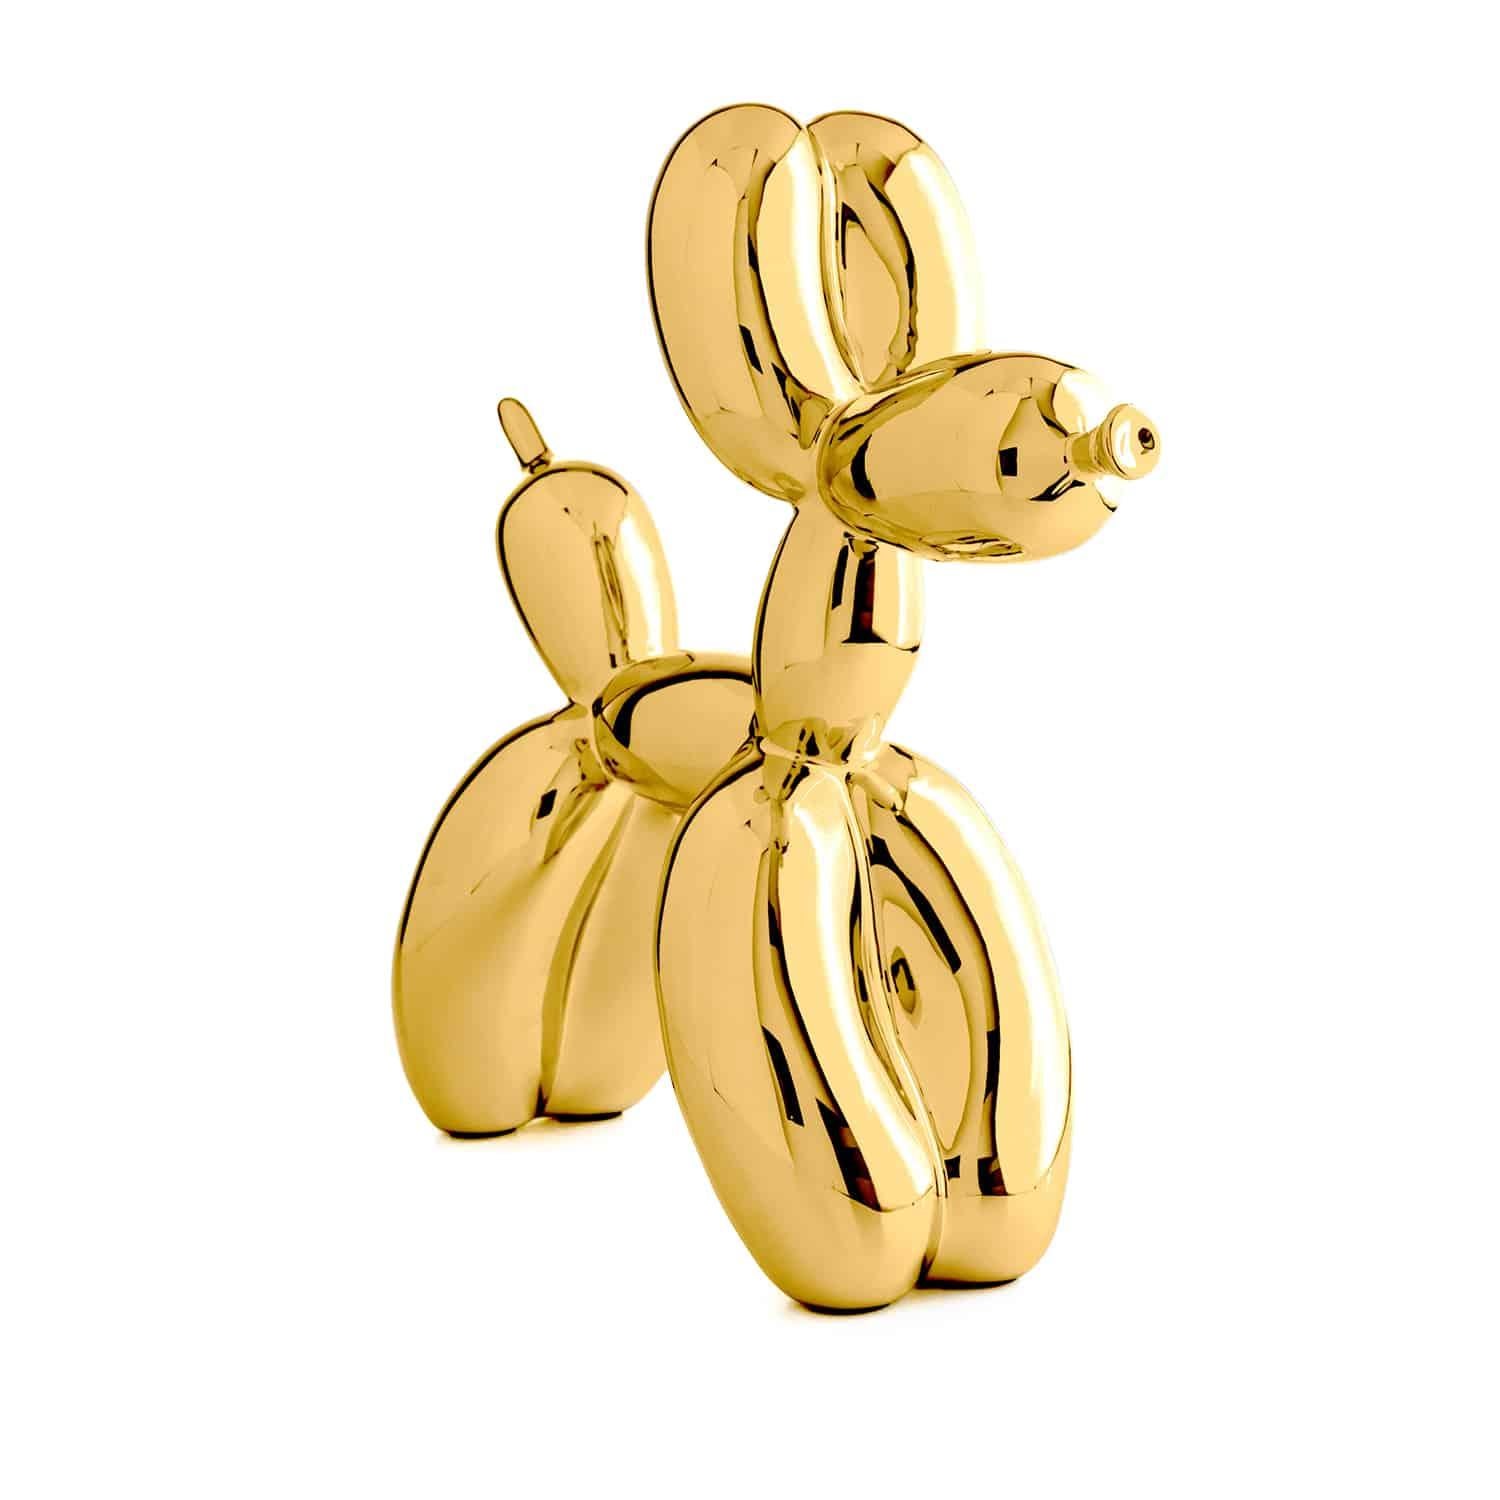 Balloon Dog ( After )  - Gold - Pop Art Sculpture by After Jeff Koons